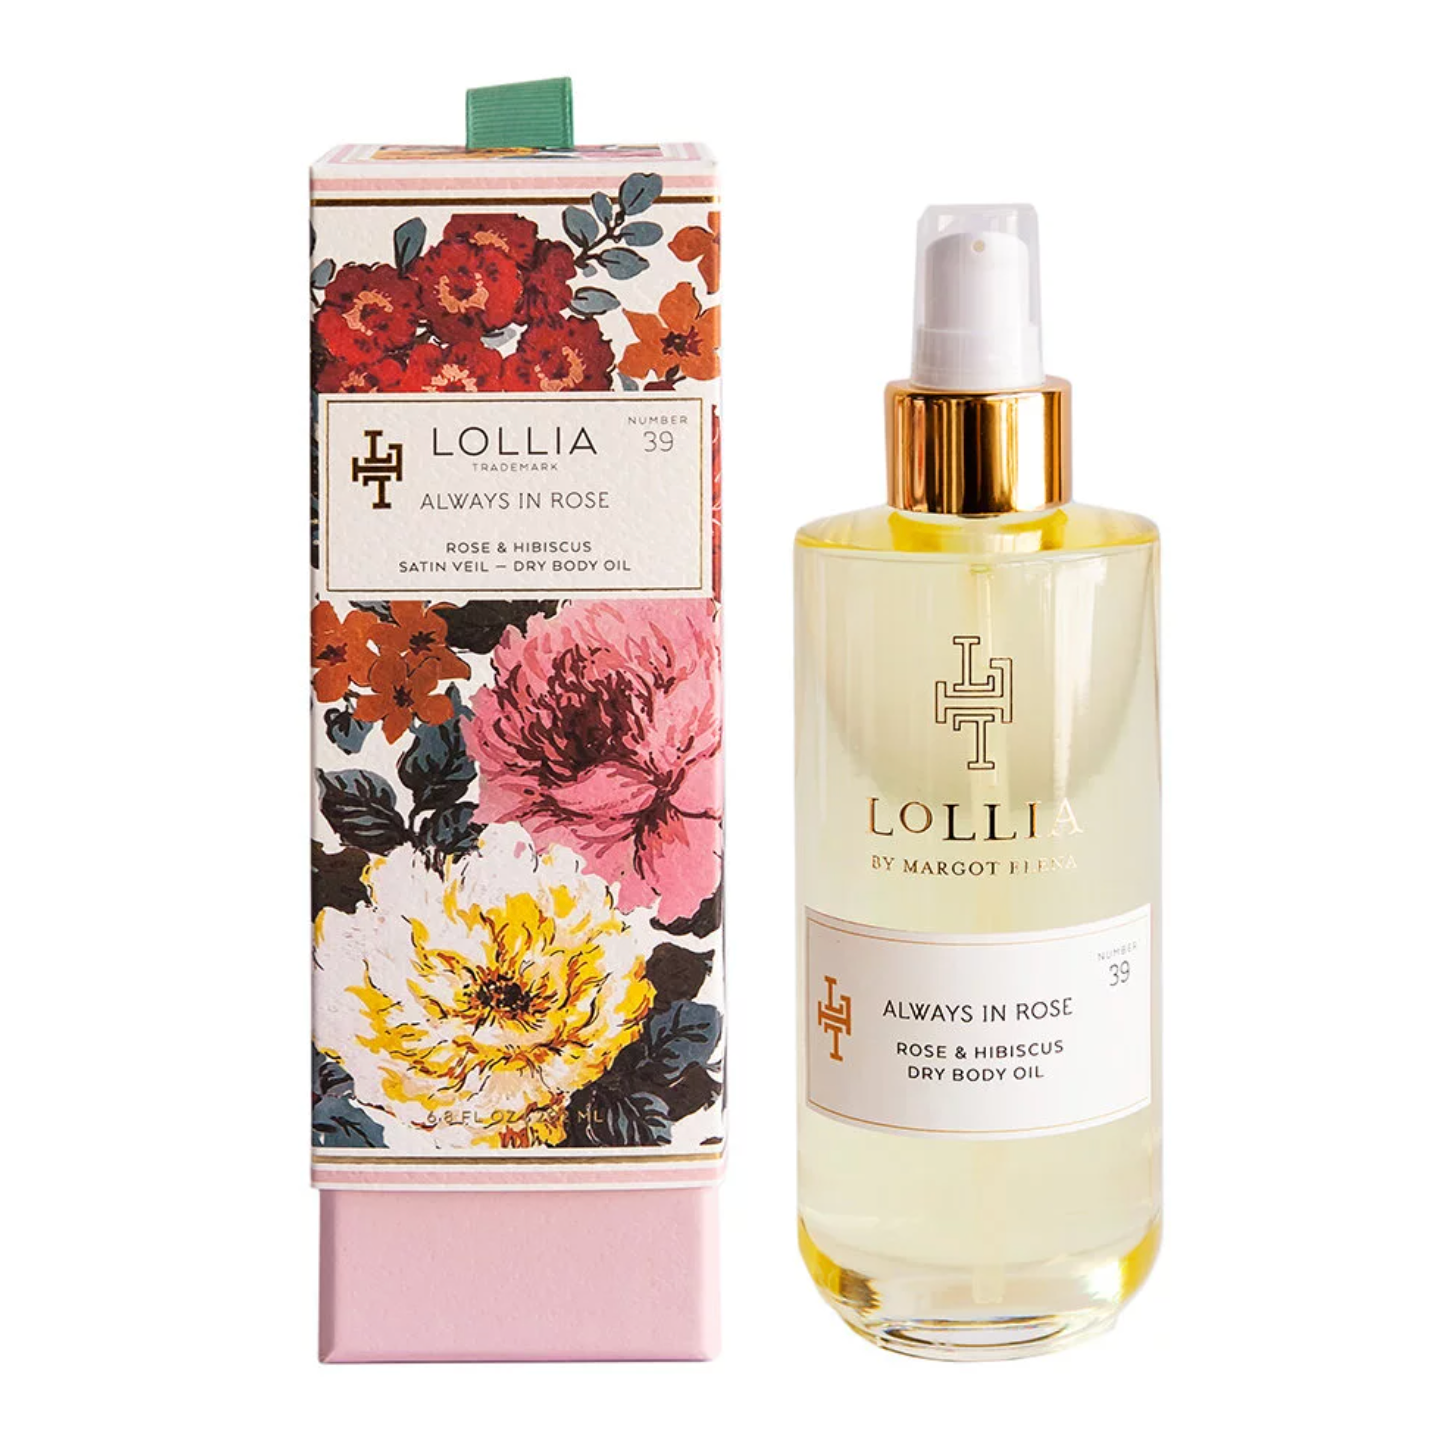 Lollia - Dry Body Oil - Always in Rose